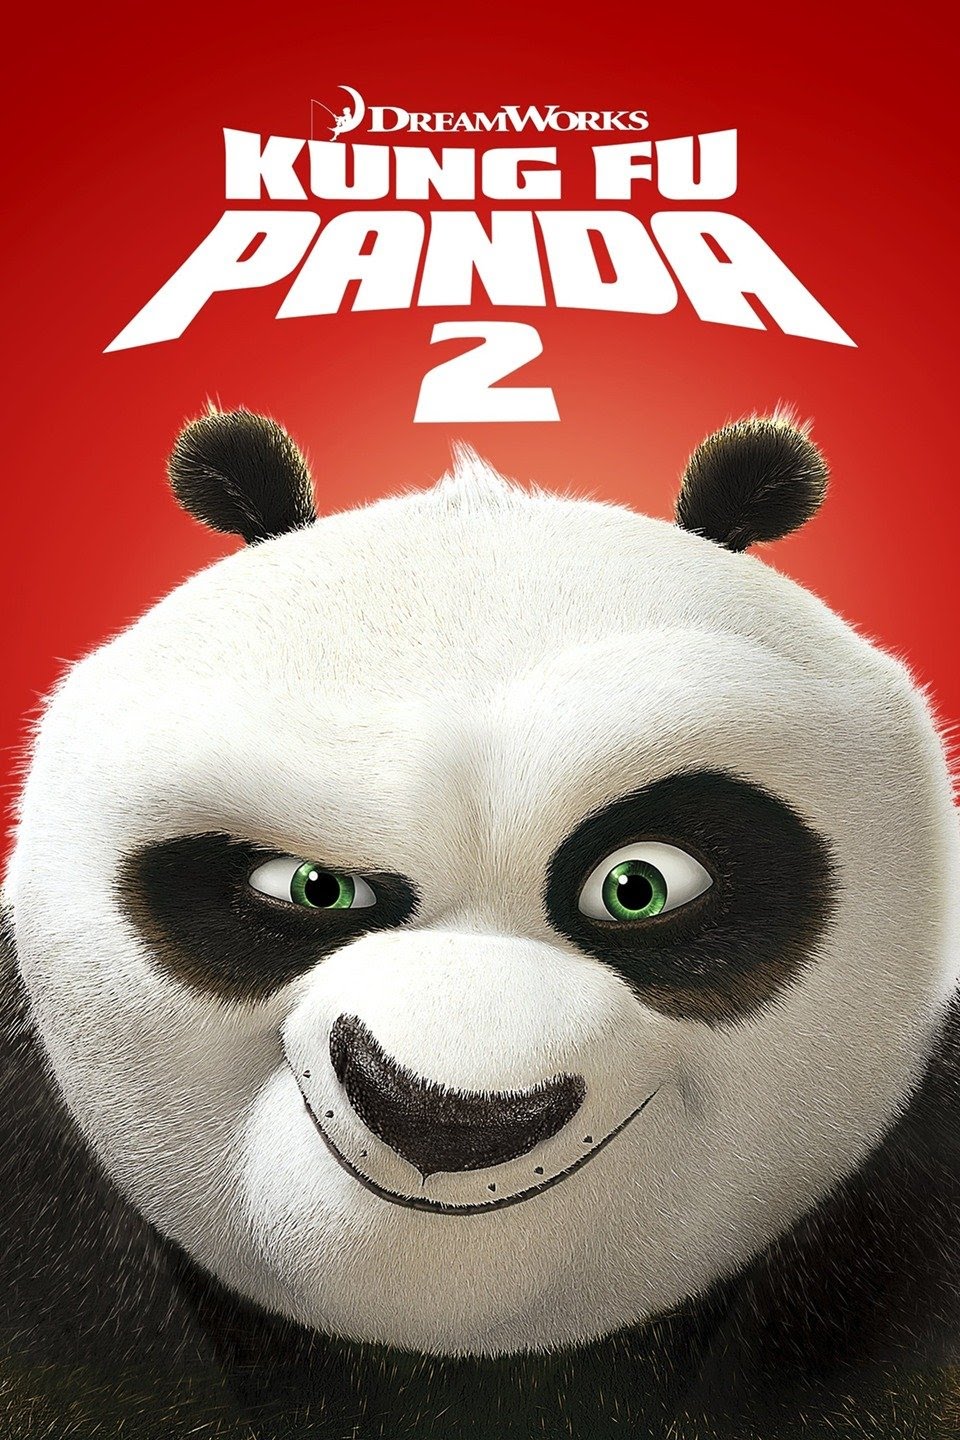 Kung Fu Panda 2 (2011) [Animation]